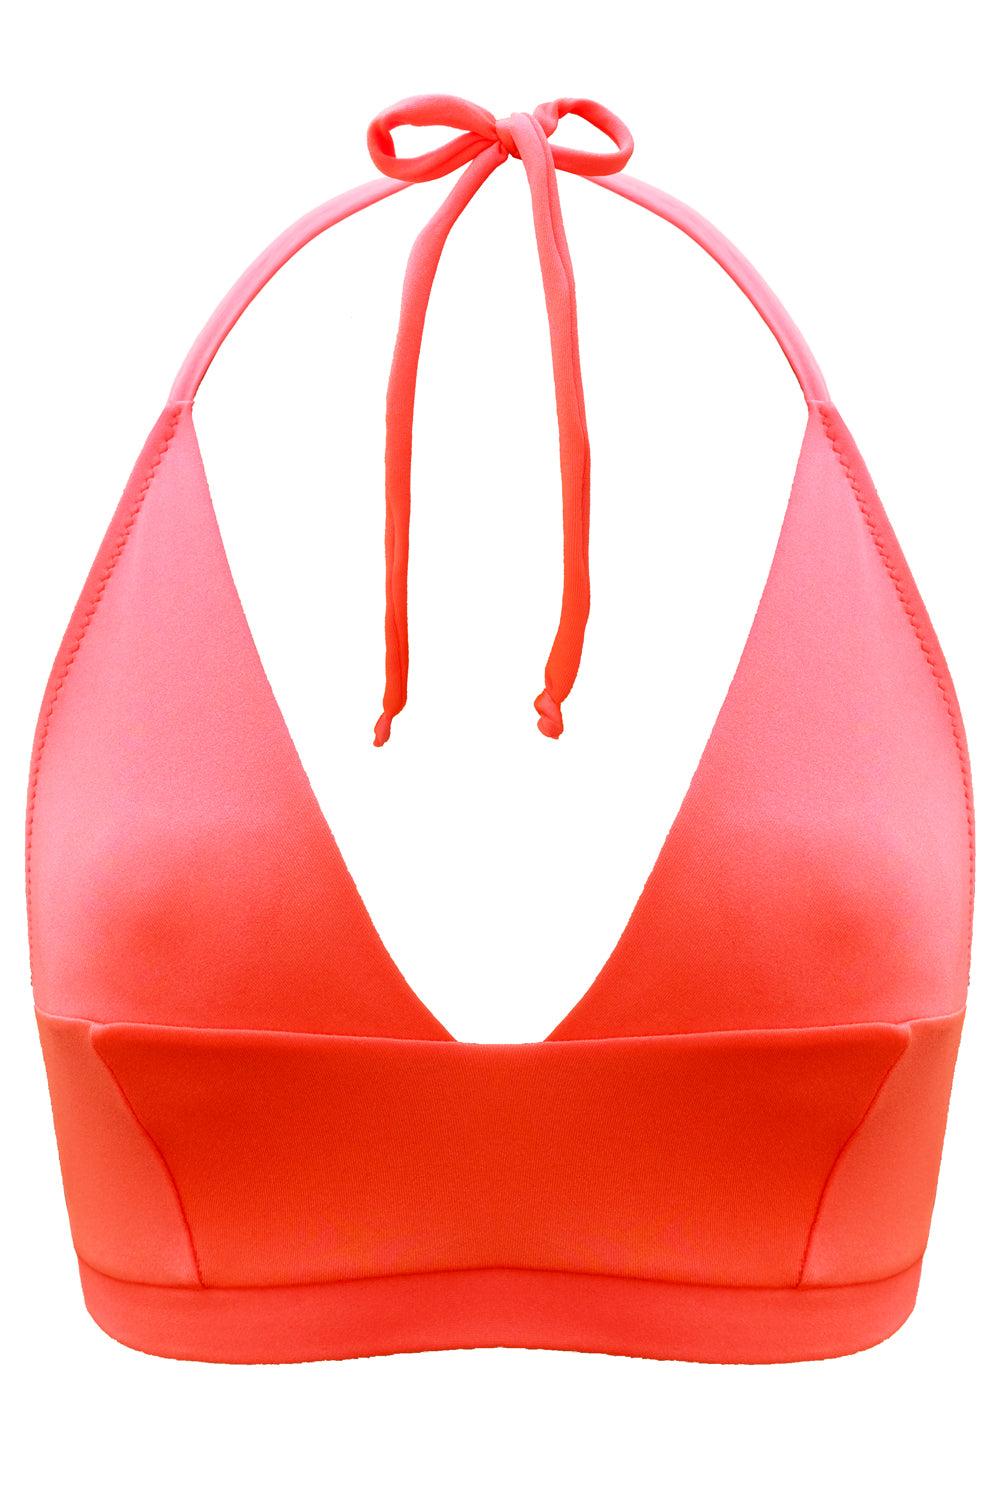 Tonic Tangerine bikini top - yesUndress